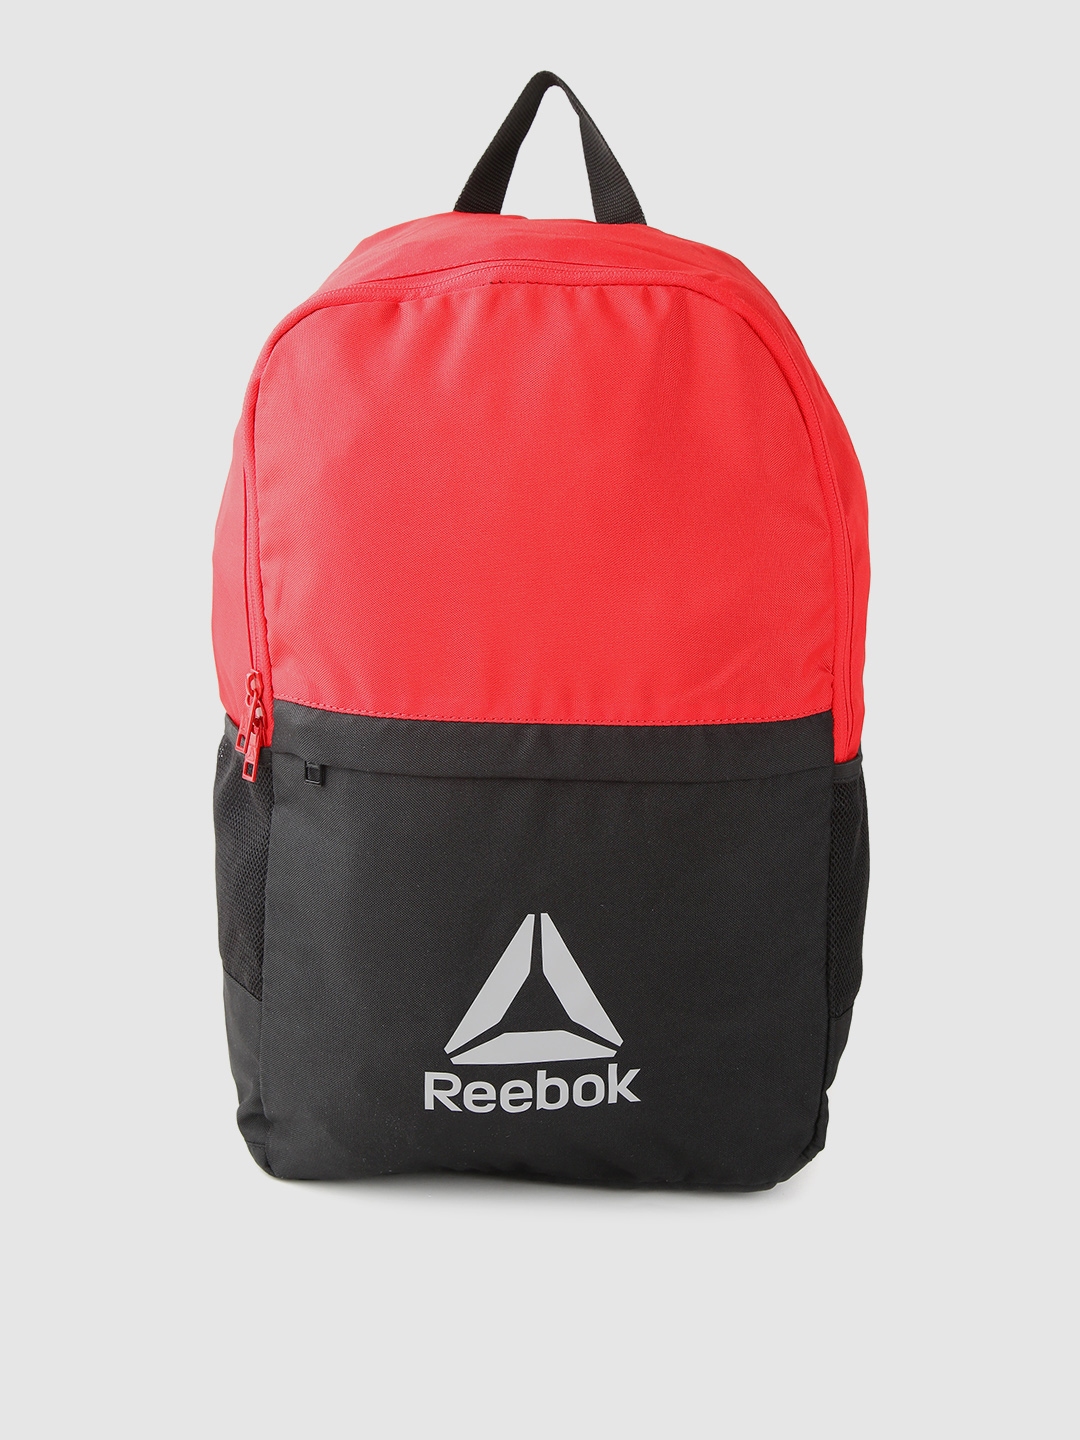 Buy Reebok Unisex Red & Black Style Fon X Colourblocked Laptop Backpack - Backpacks for Unisex 